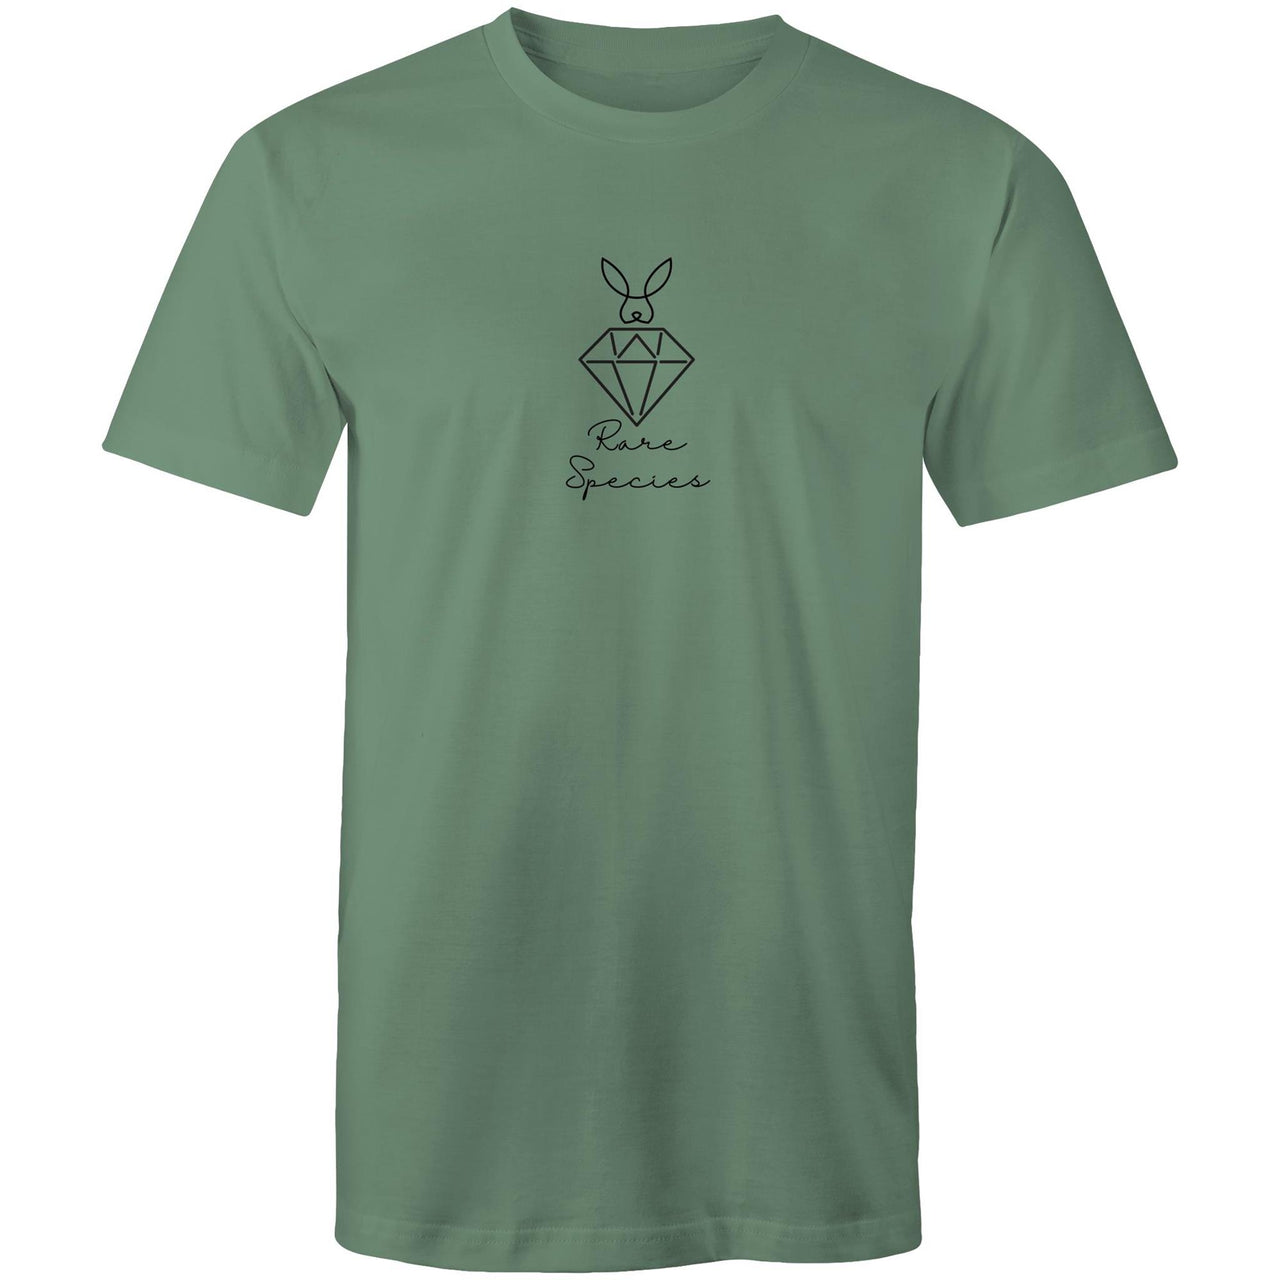 CBF Rare Species Crew T-Shirt green by CBF Clothing